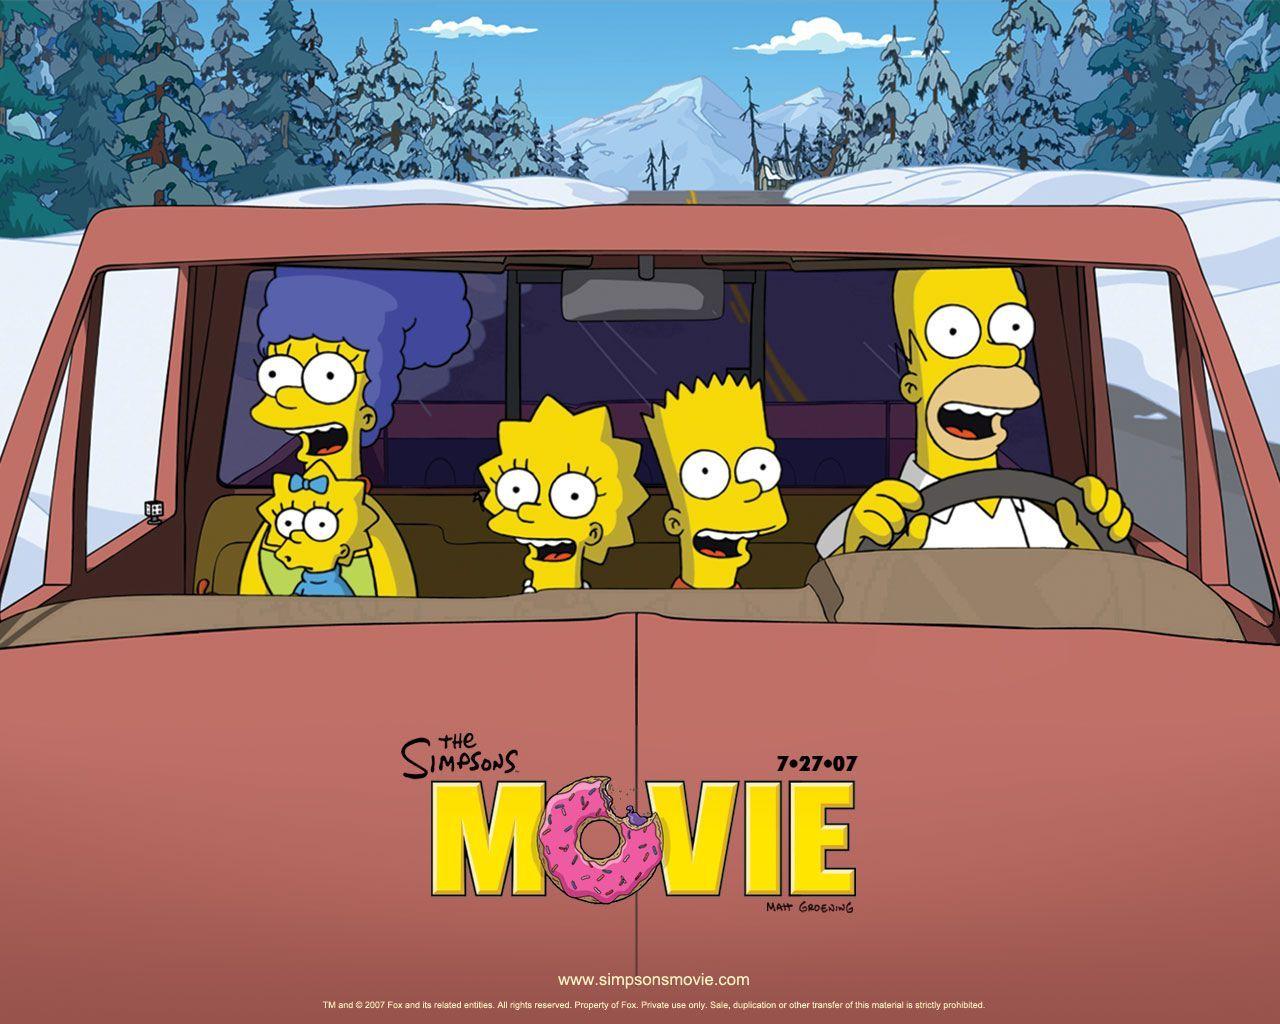 Simpsons Movie Wallpaper